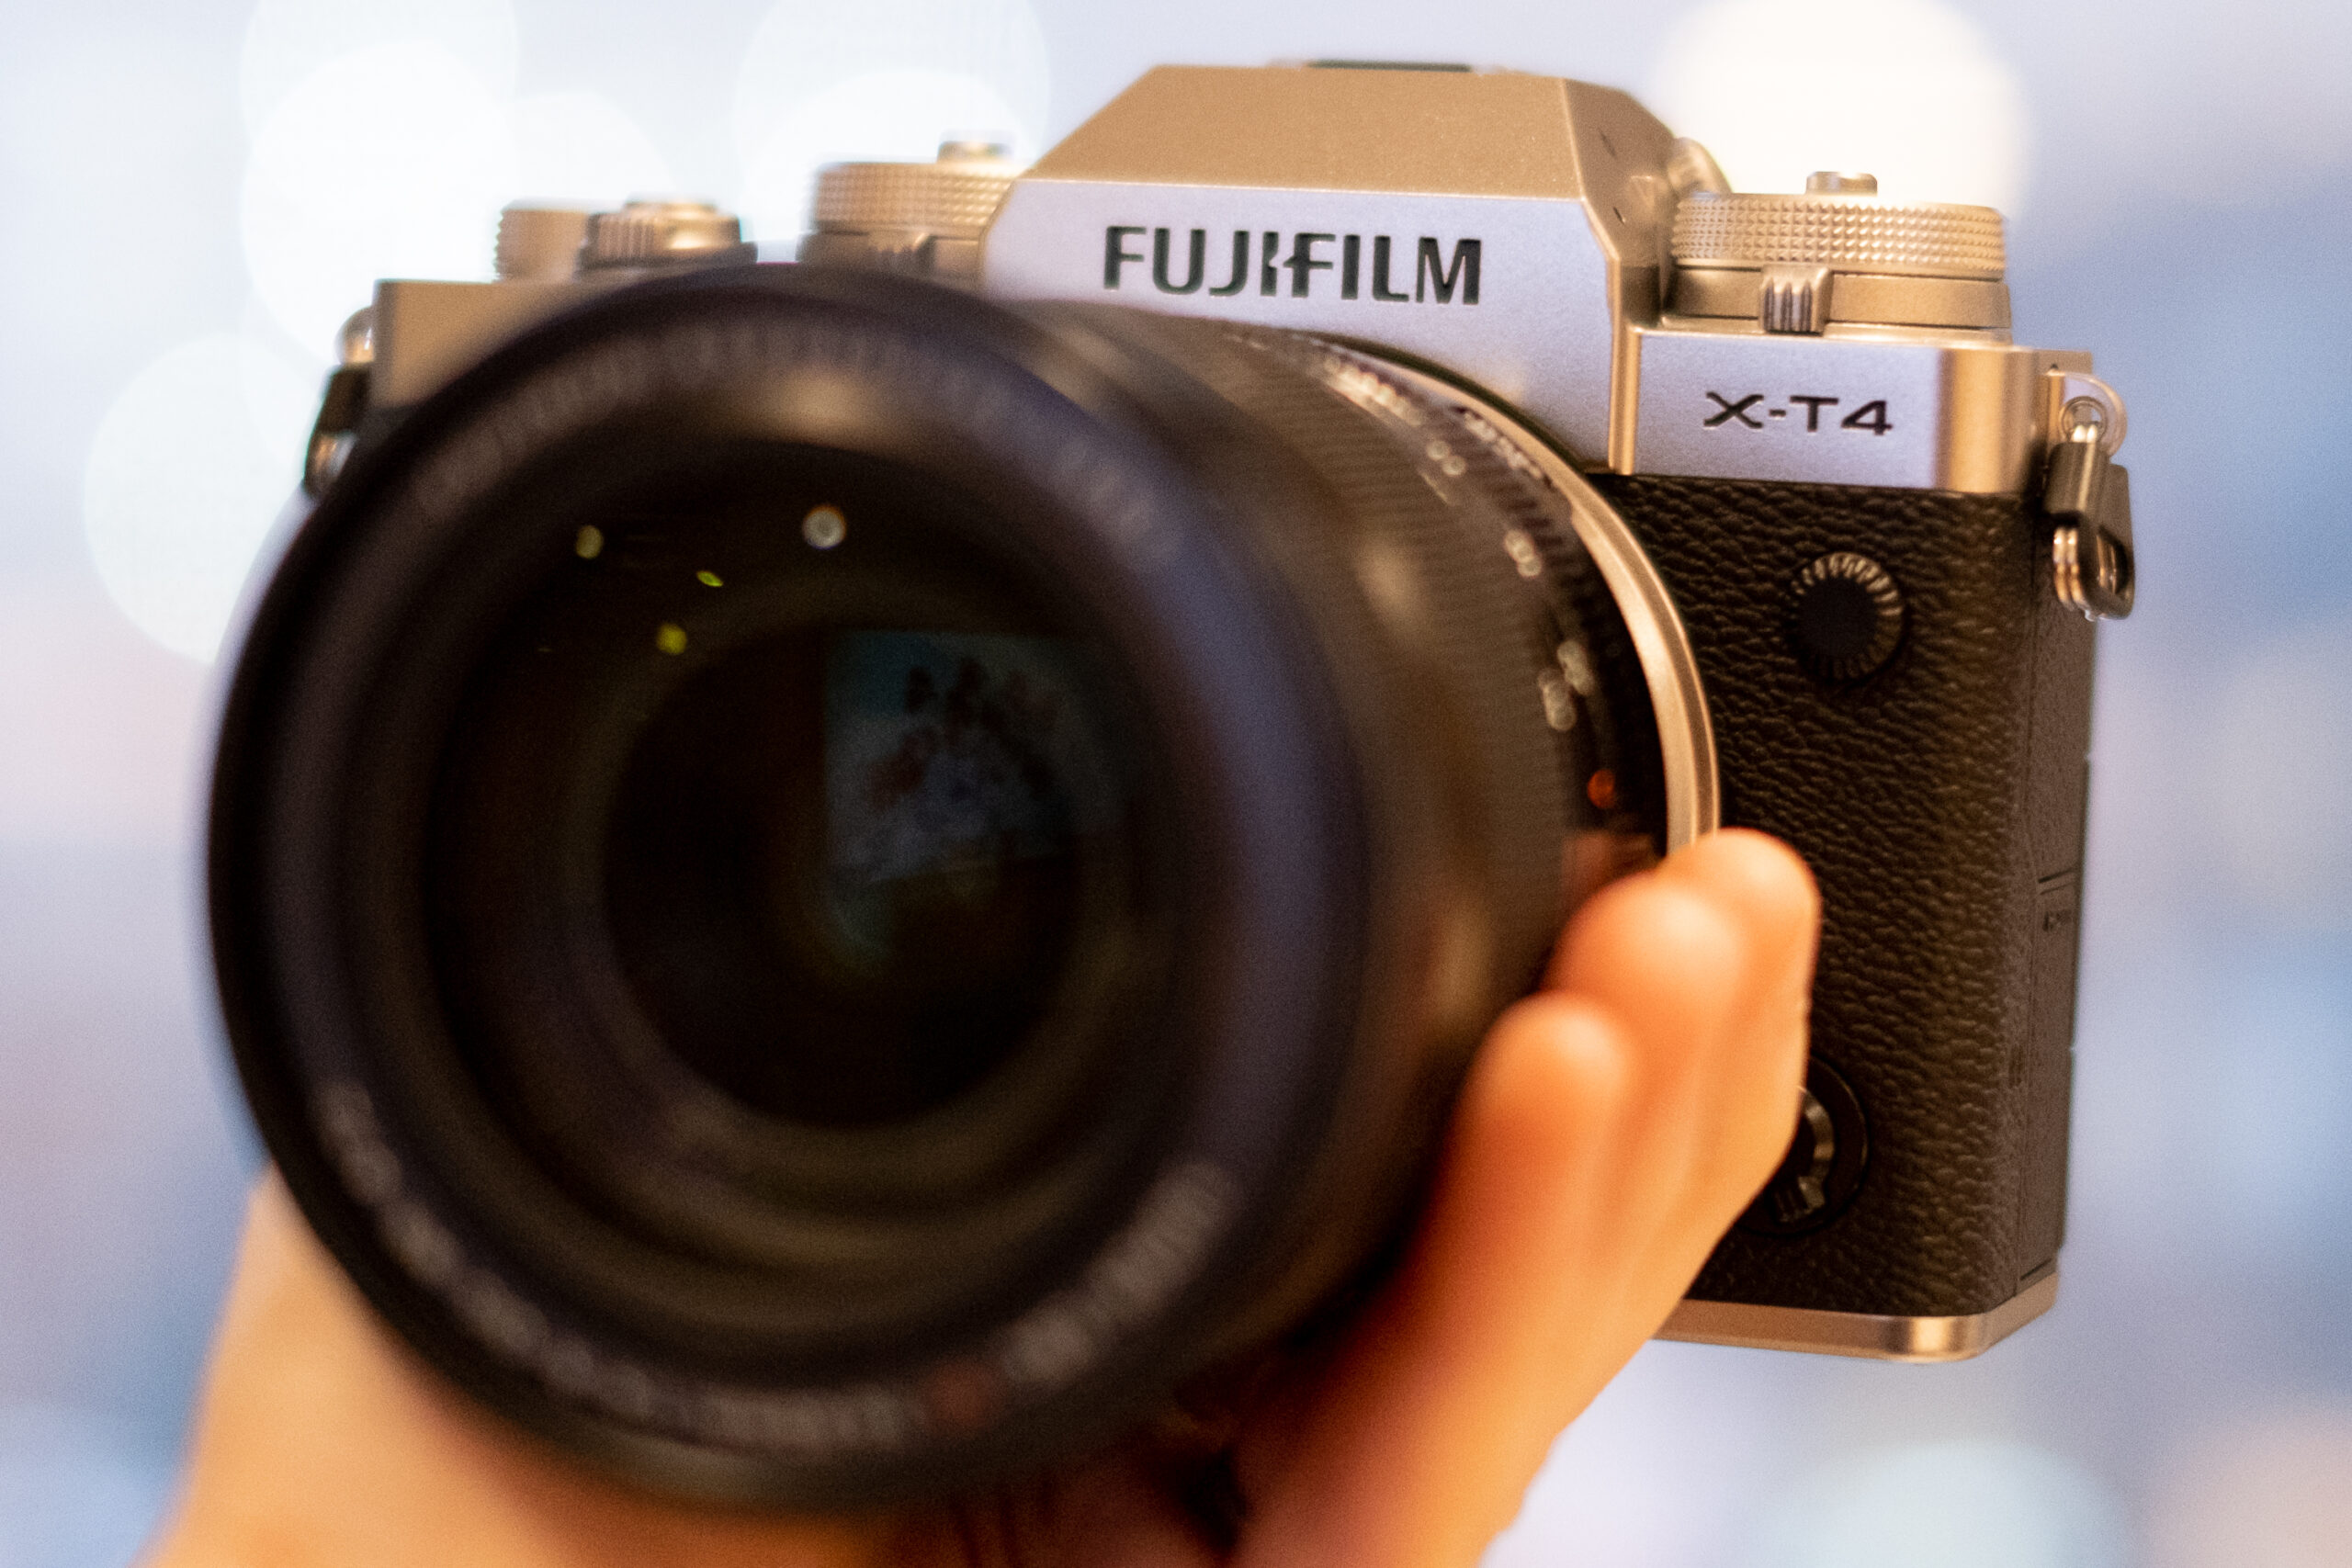 First shots with Fujifilm’s X-T4 Mirrorless camera